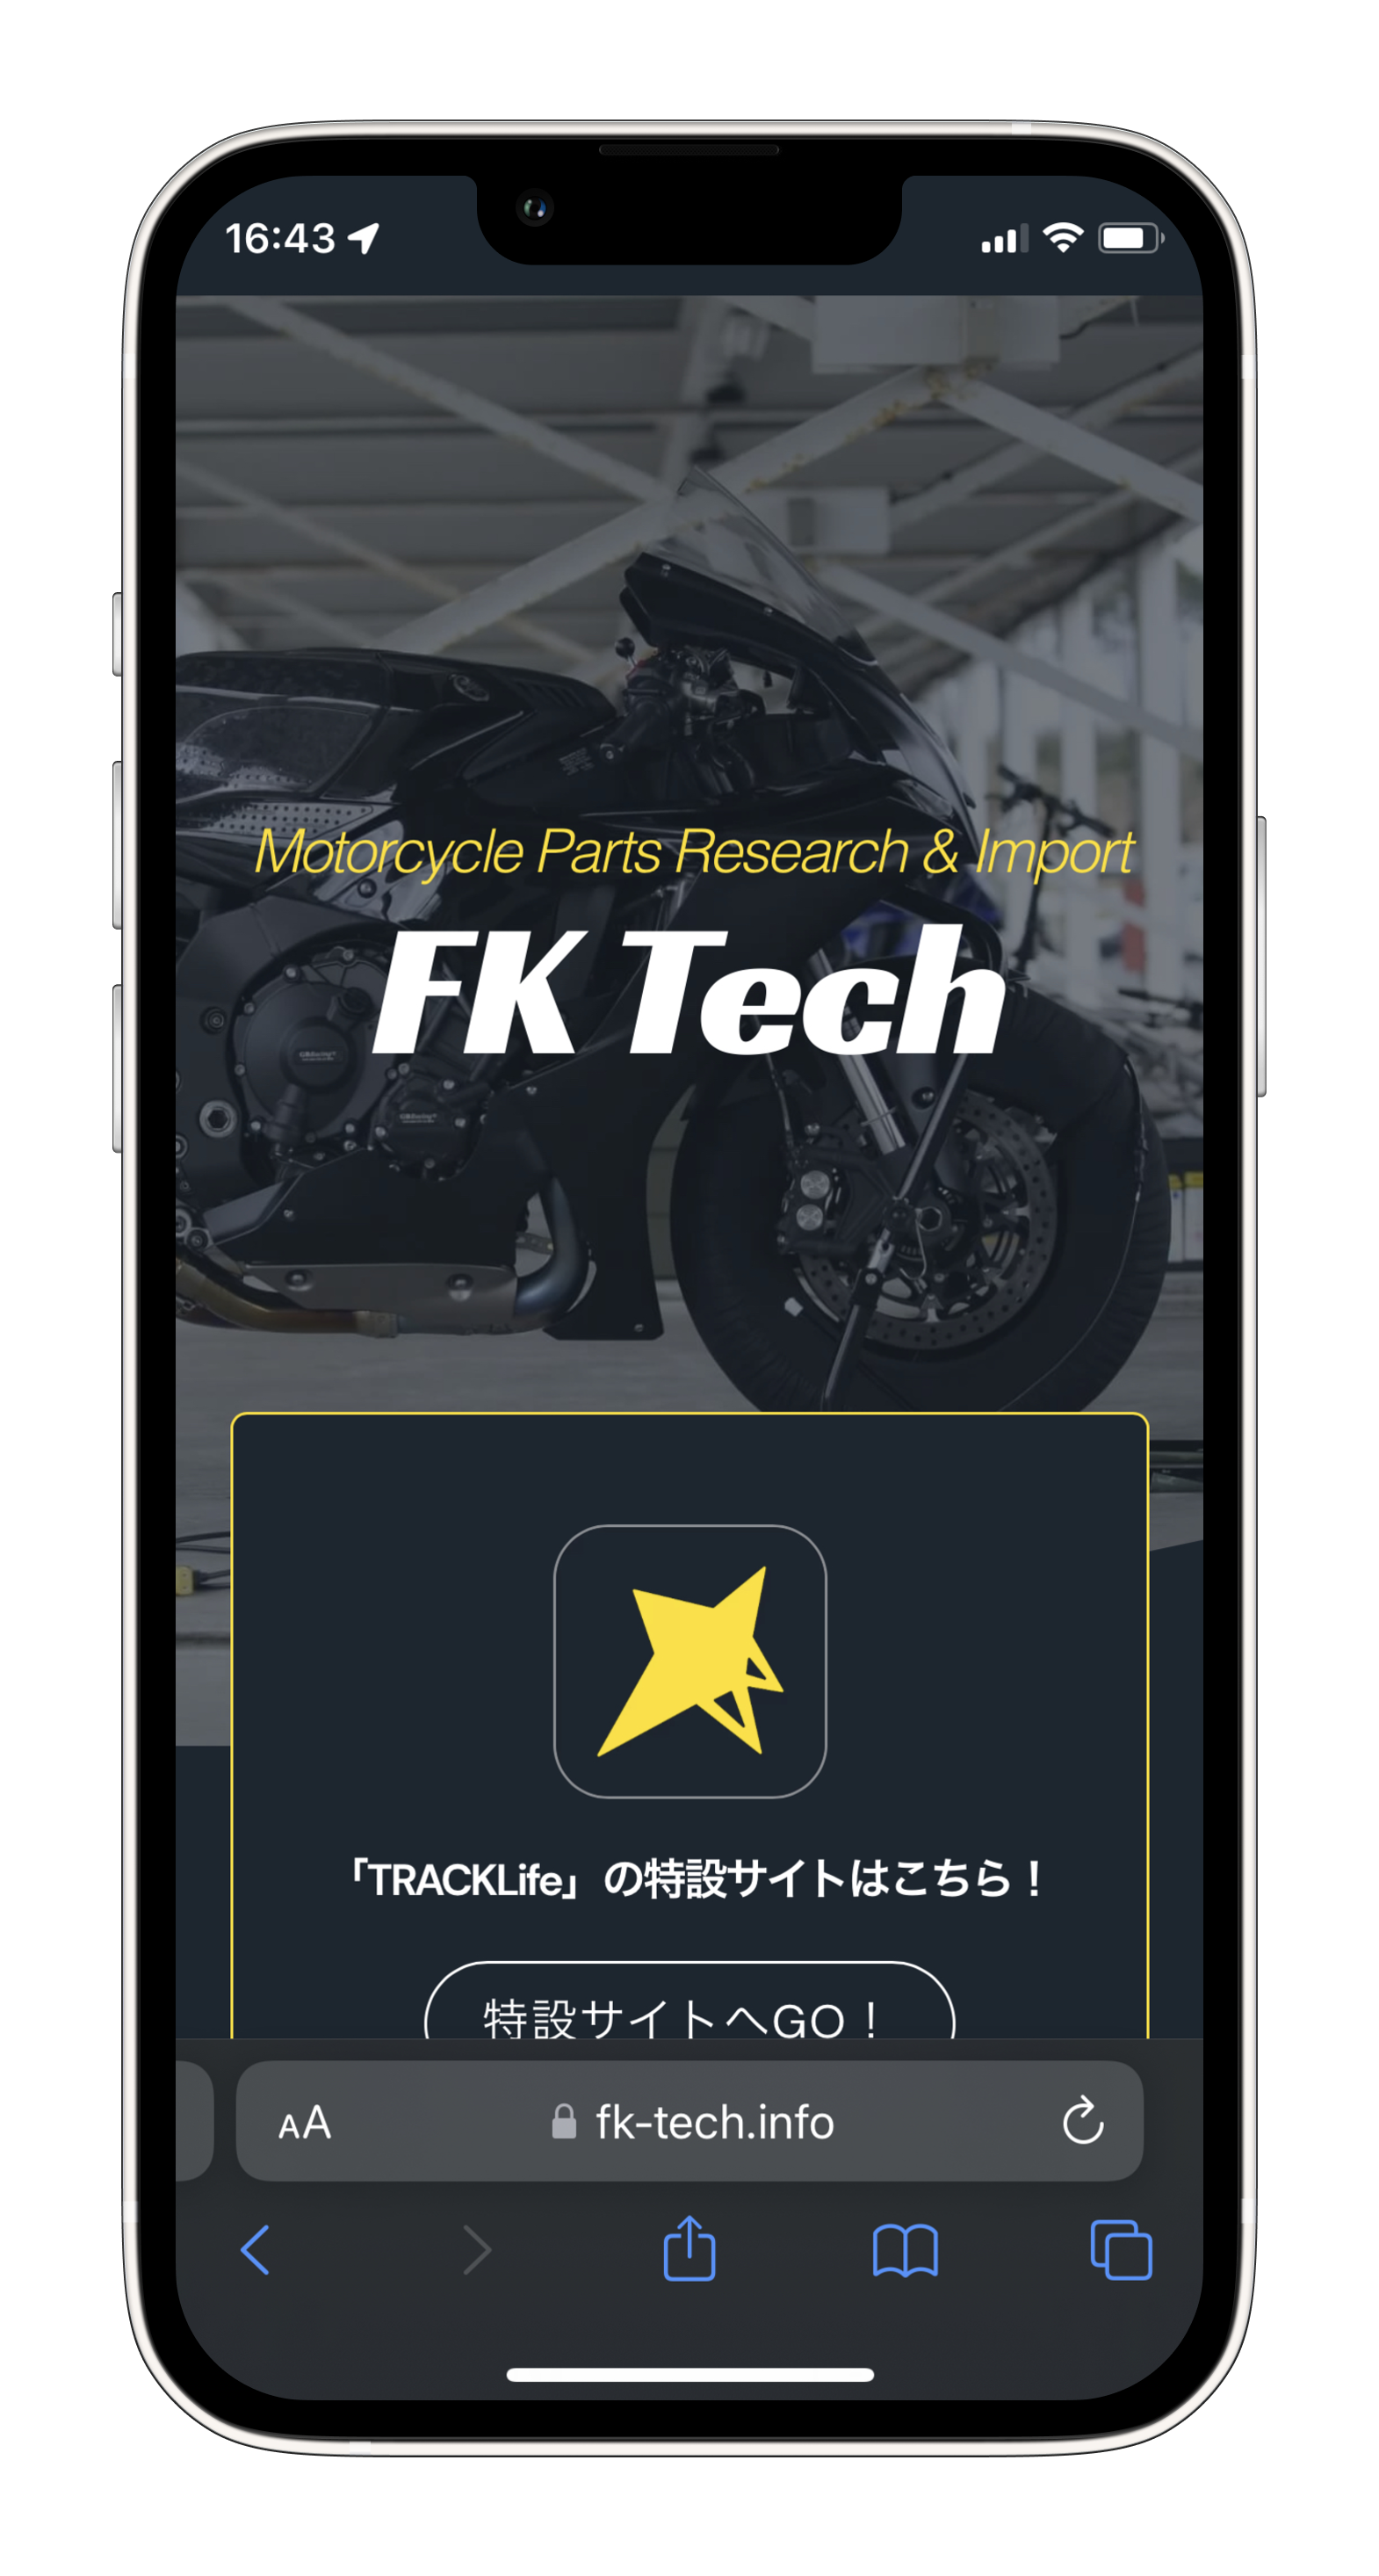 FK Tech website on smartphone